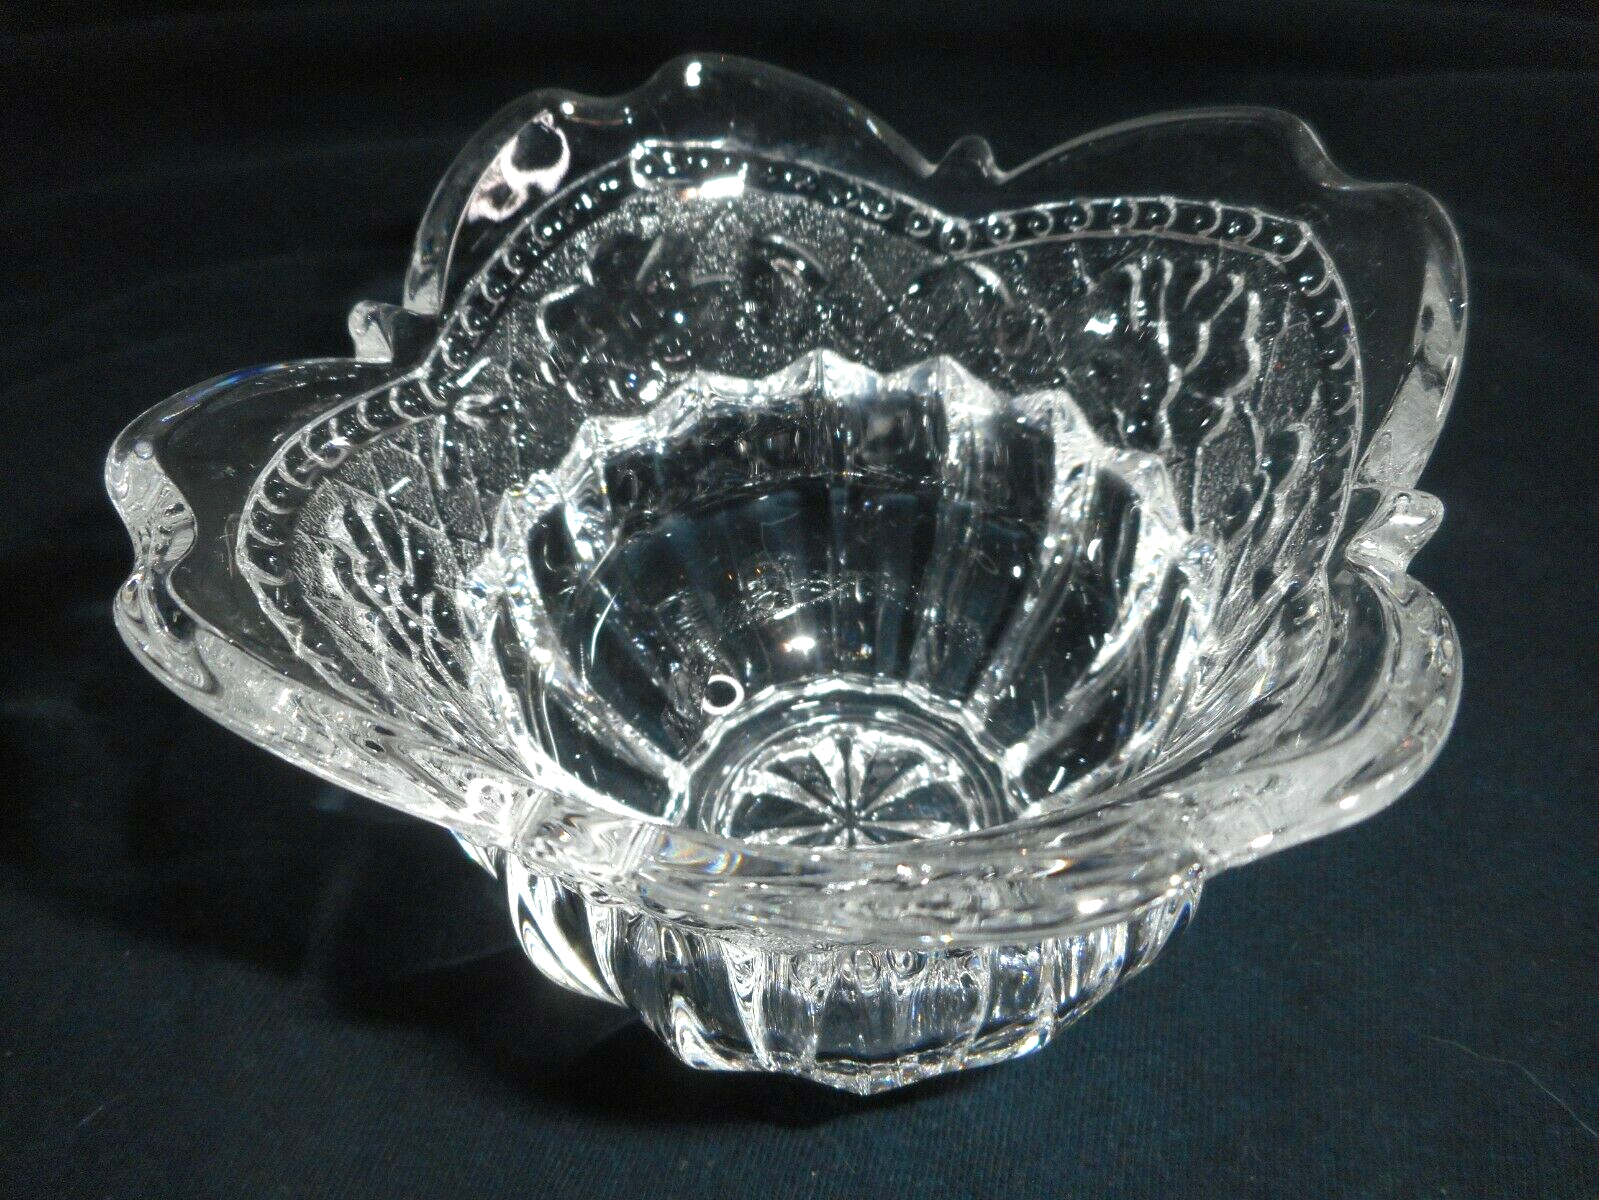 Studio Nova Floral Lace Votive Candleholder Clear Cut Glass Scalloped Top 3 1/4" - $20.99